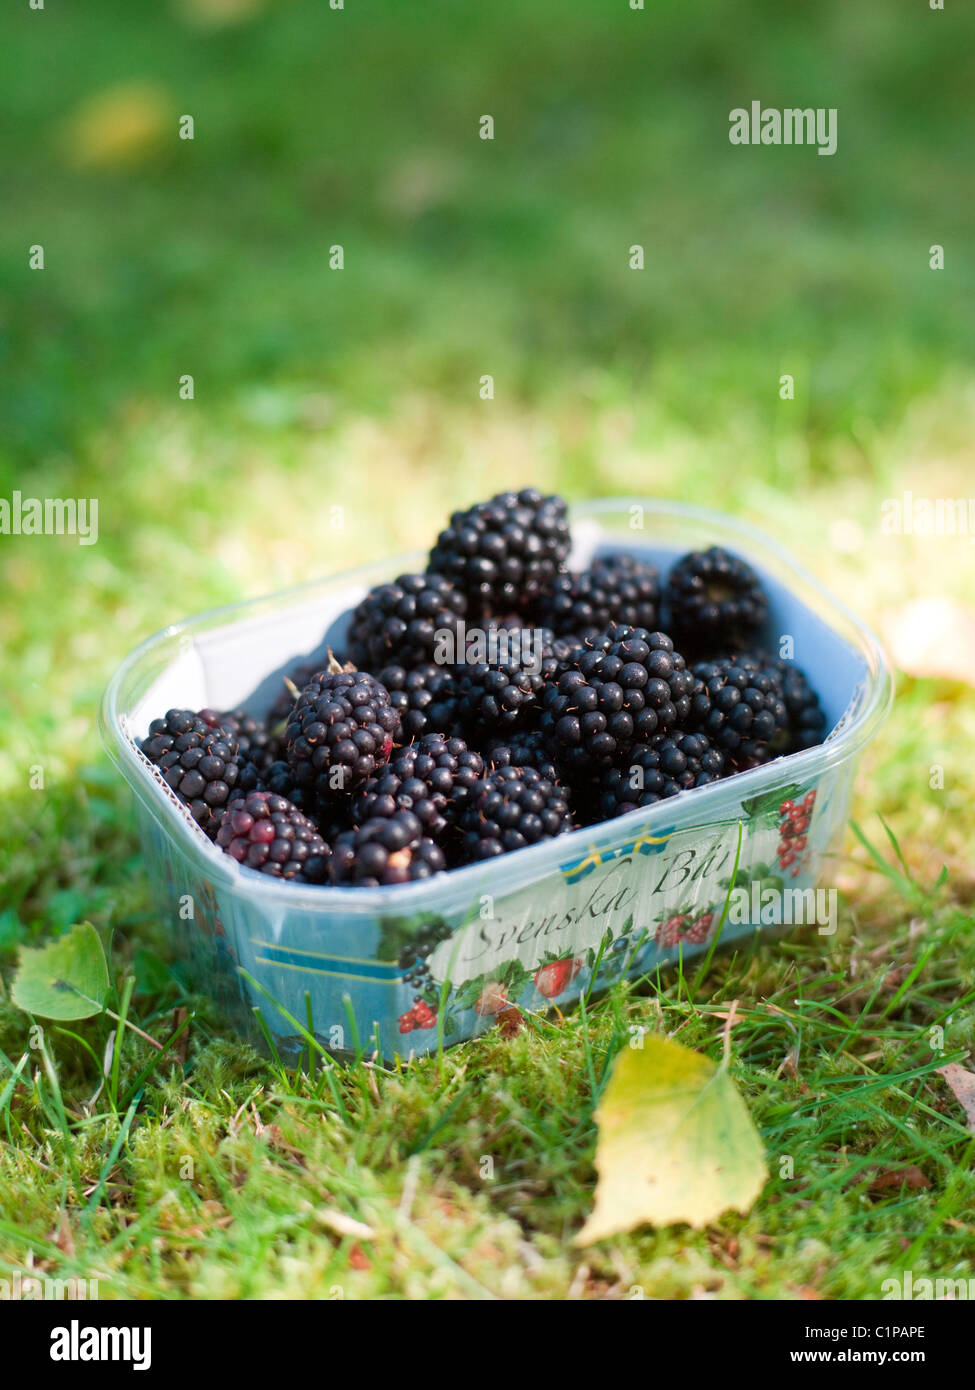 Box of blackberries on grass Stock Photo